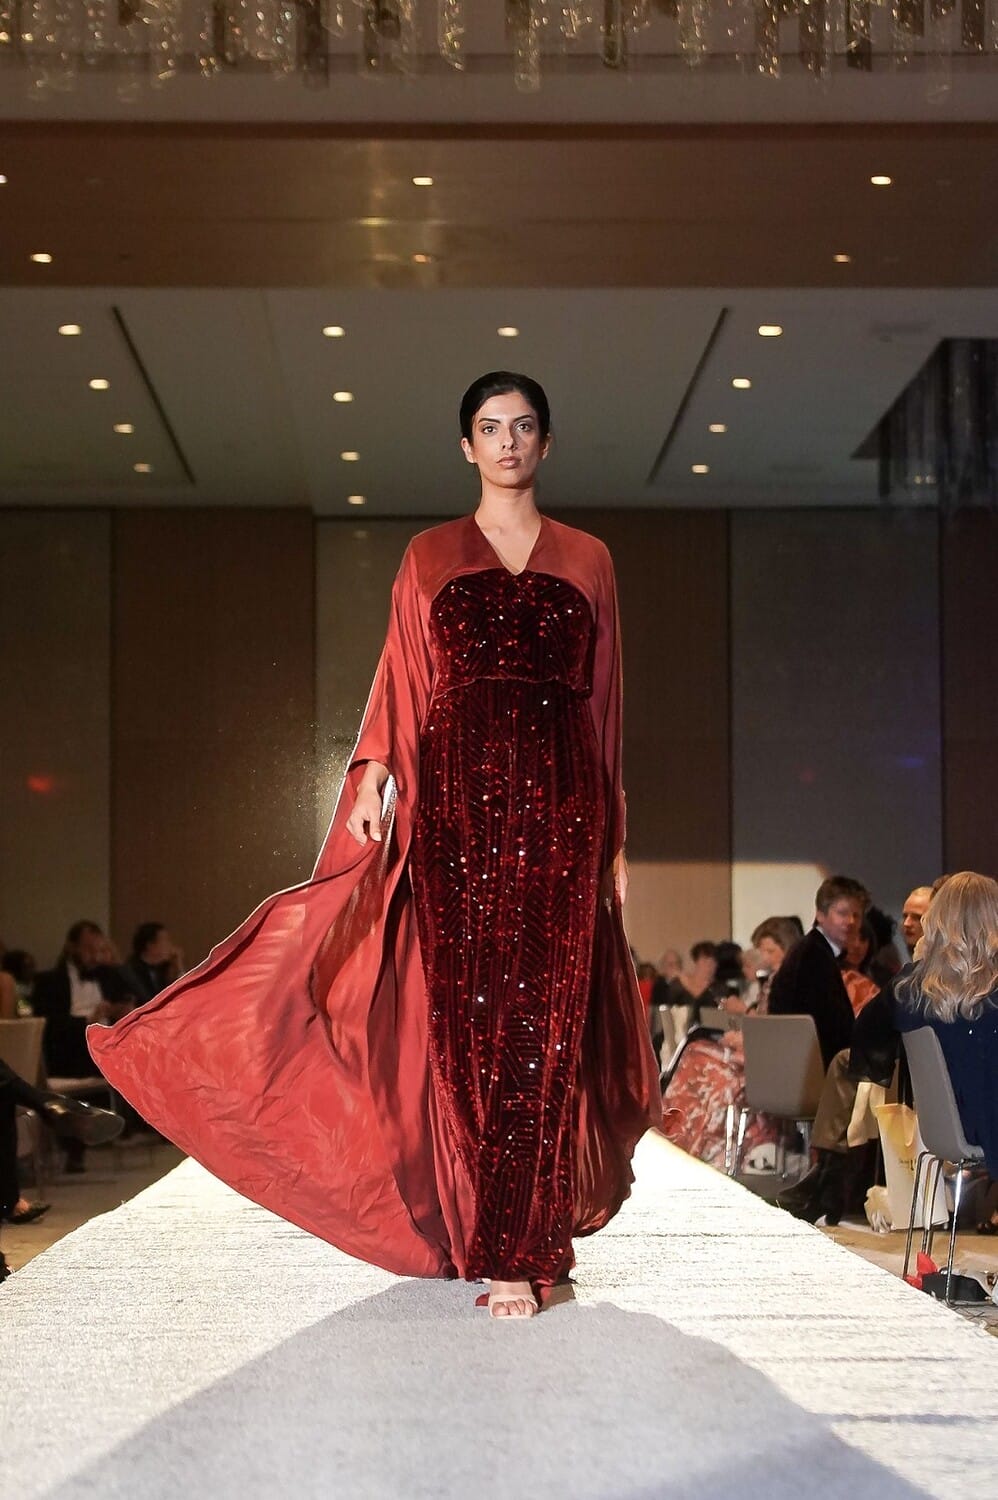 First Fashion Gala Yana Ziolkowski modeling a dress created by Armenian designer Vahan Khachatryan